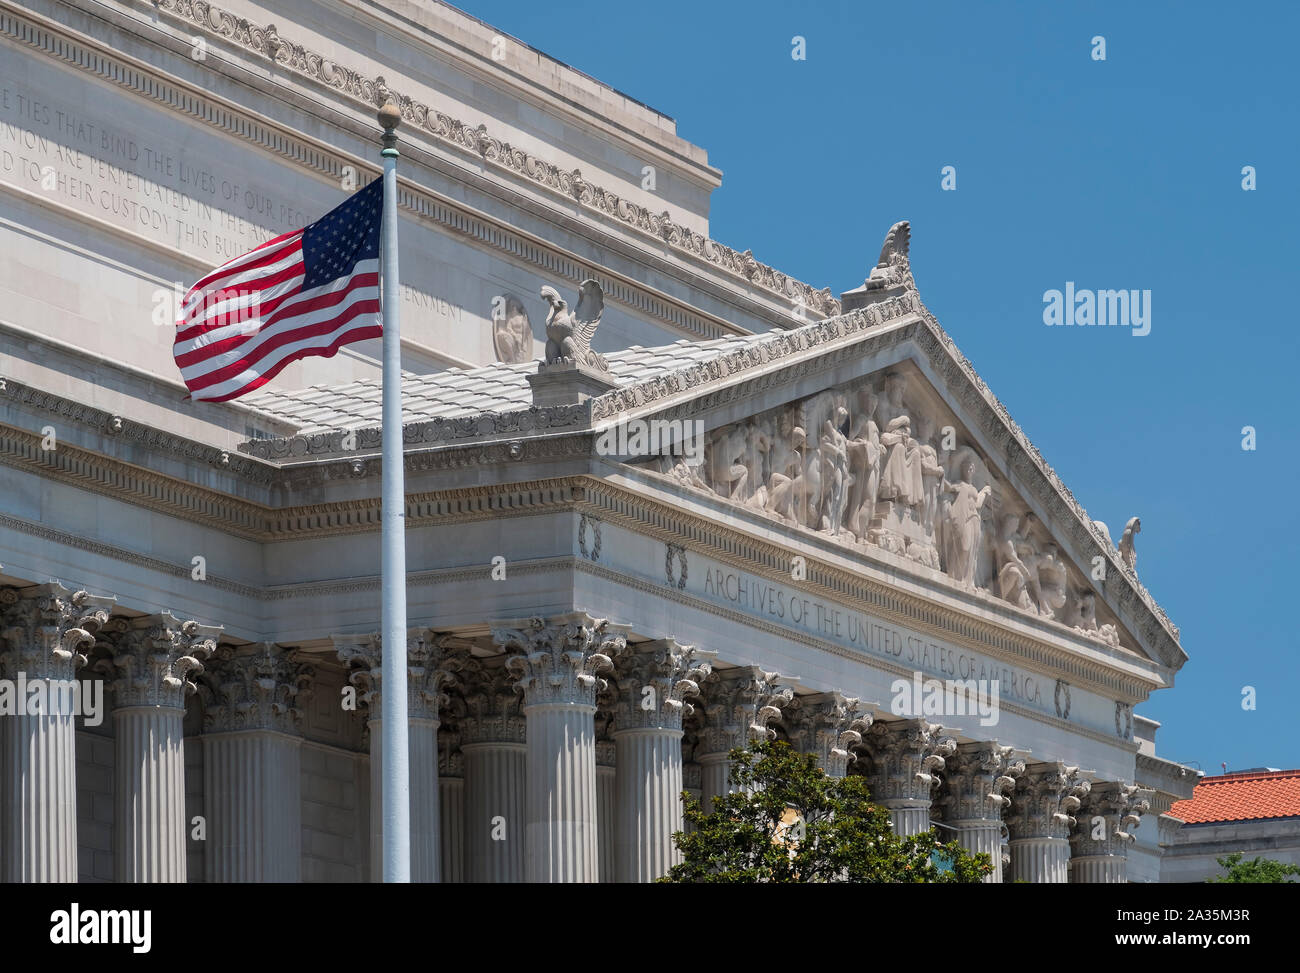 Nationalarchiv der Vereinigten Staaten von Amerika Gebäude, Pennsylvania Avenue, Washington D.C. Stockfoto